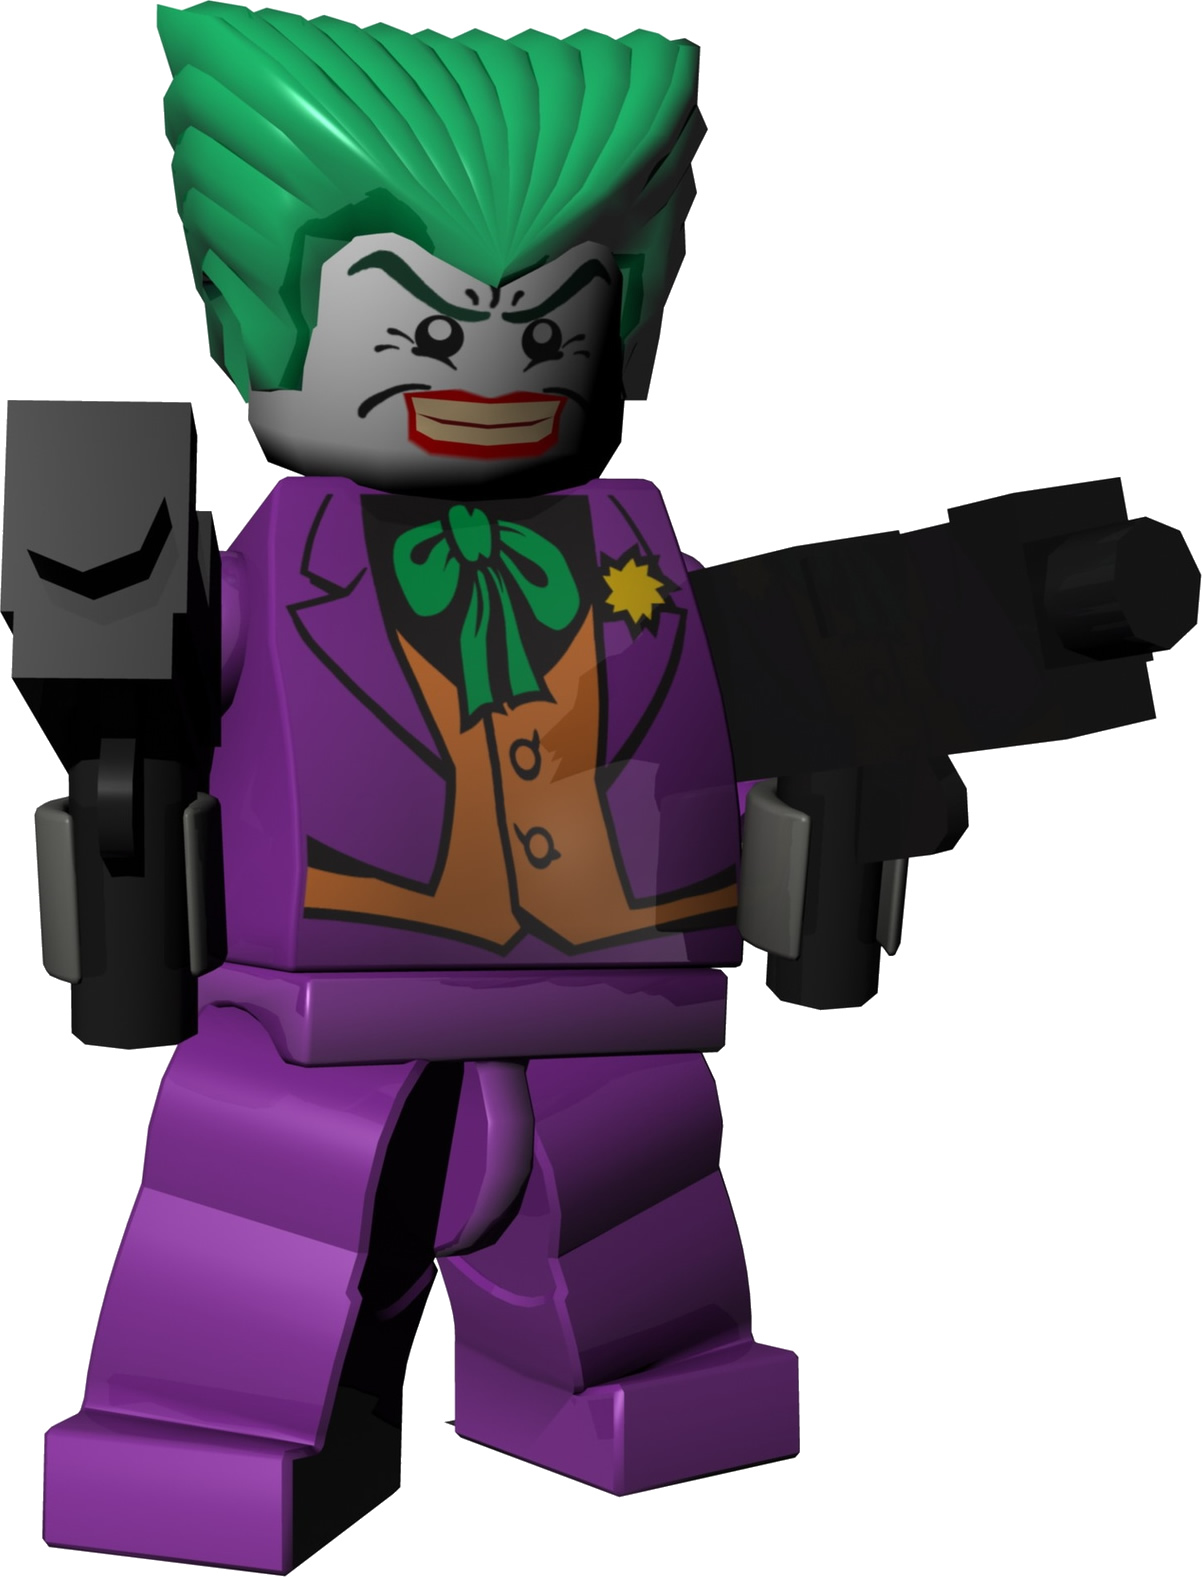 Image - The Joker.jpg | LEGO Batman Wiki | FANDOM powered ...